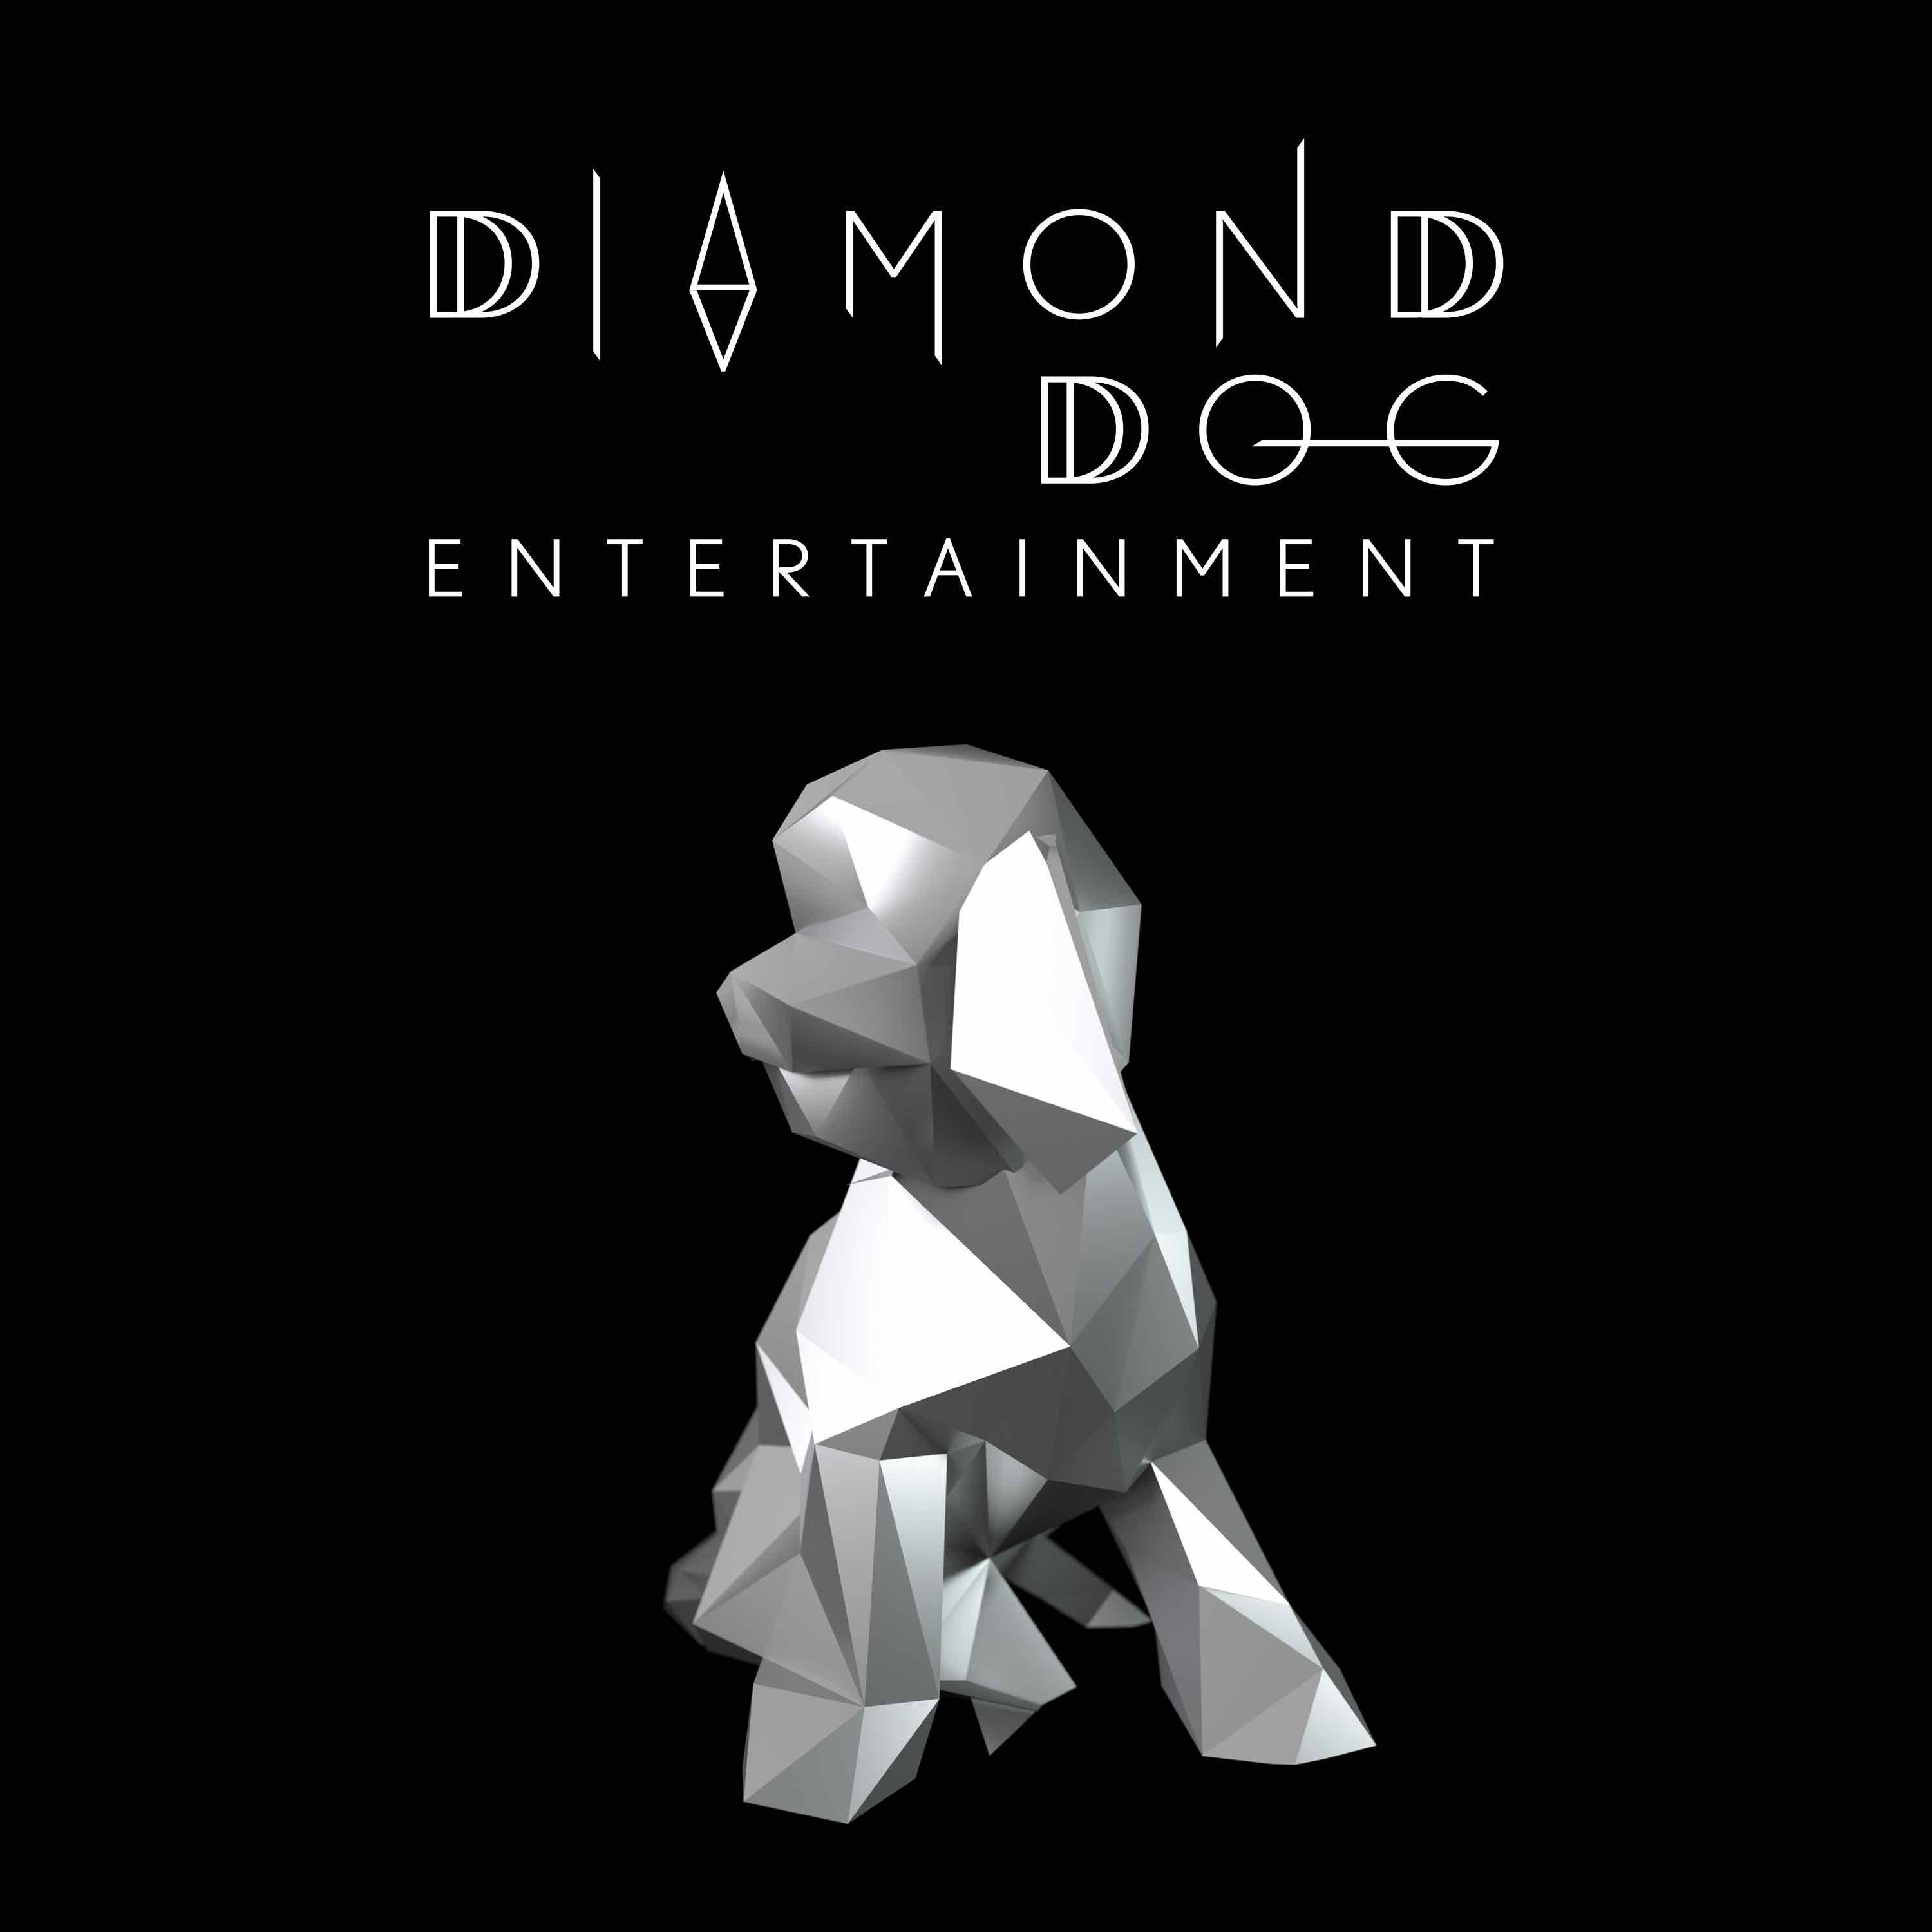 Diamond Dog Entertainment